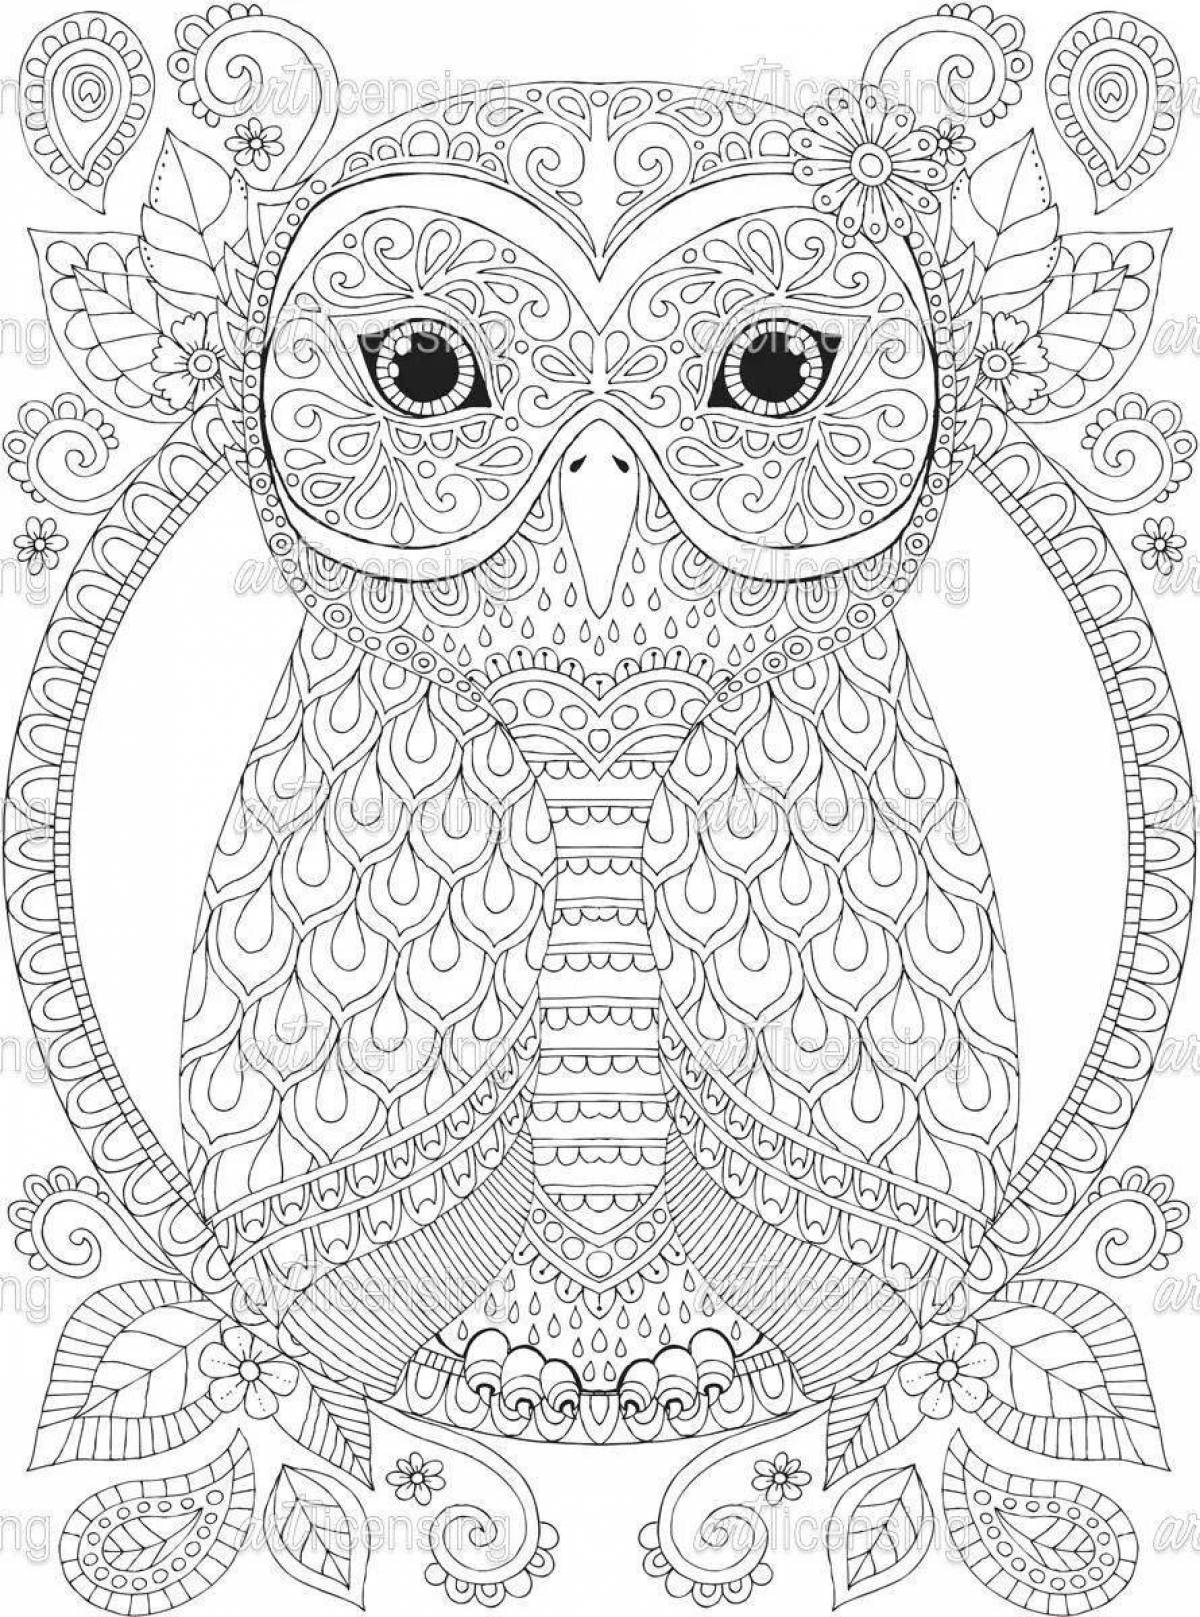 Coloring book nice anti-stress owls